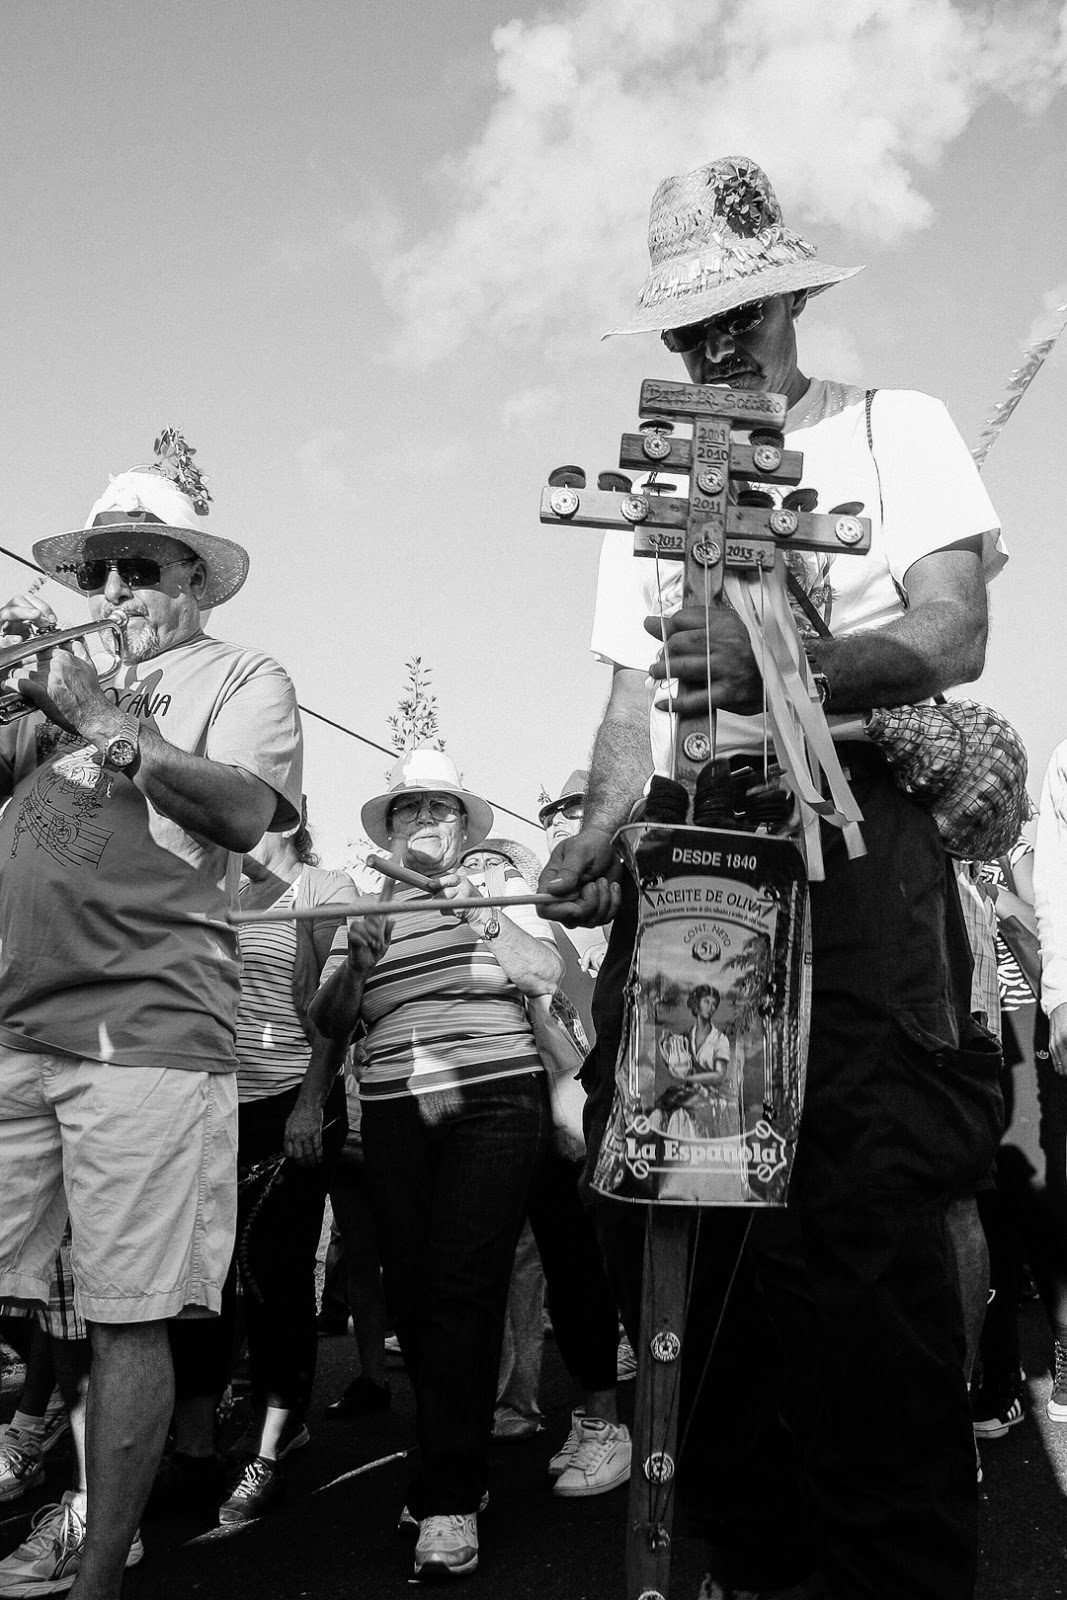 Romeria, Guimar - Socorro; Famous inprovised instrument: Racha - racha